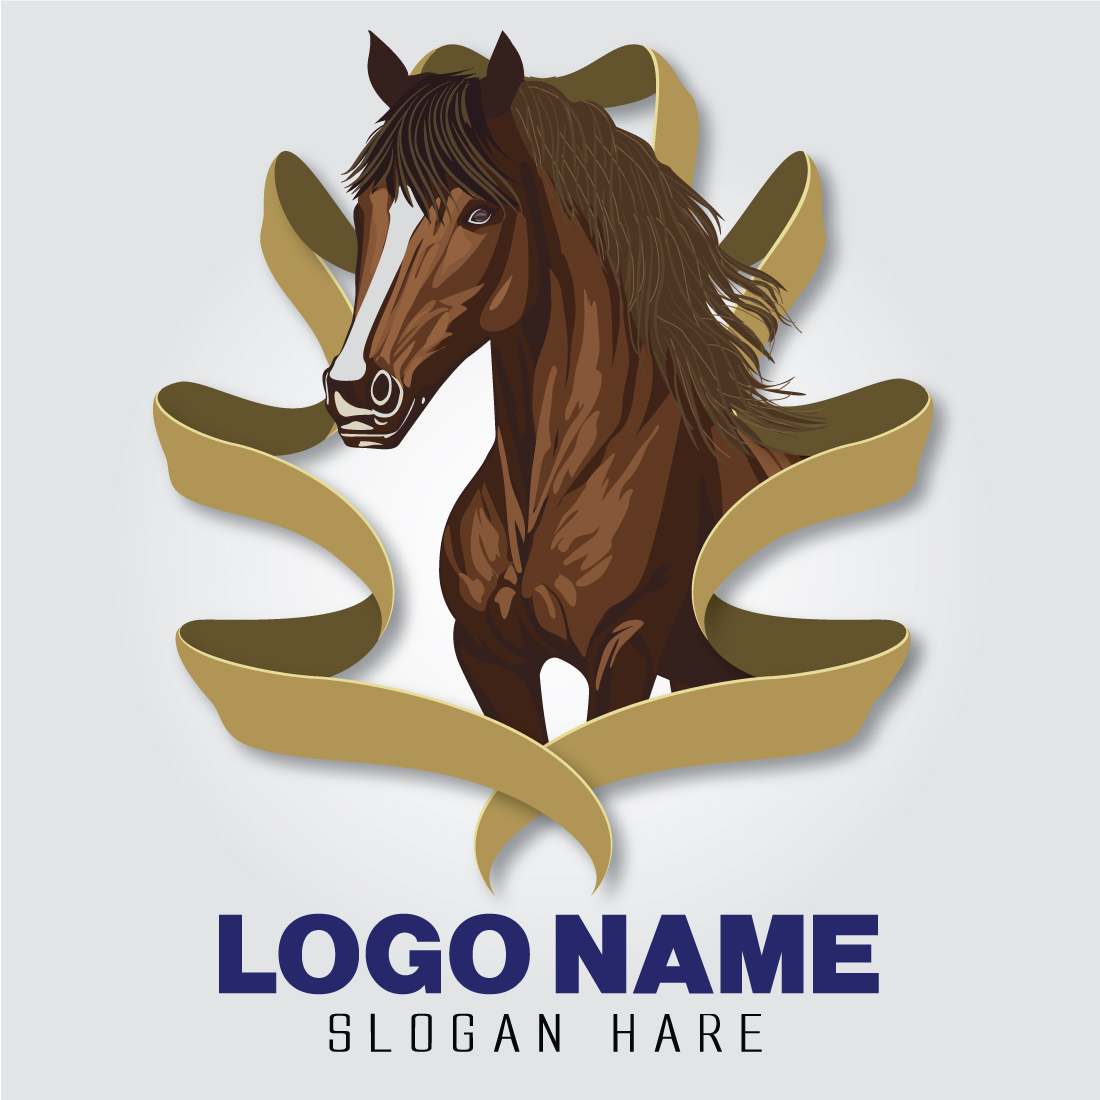 emblem-horse-logo preview image.